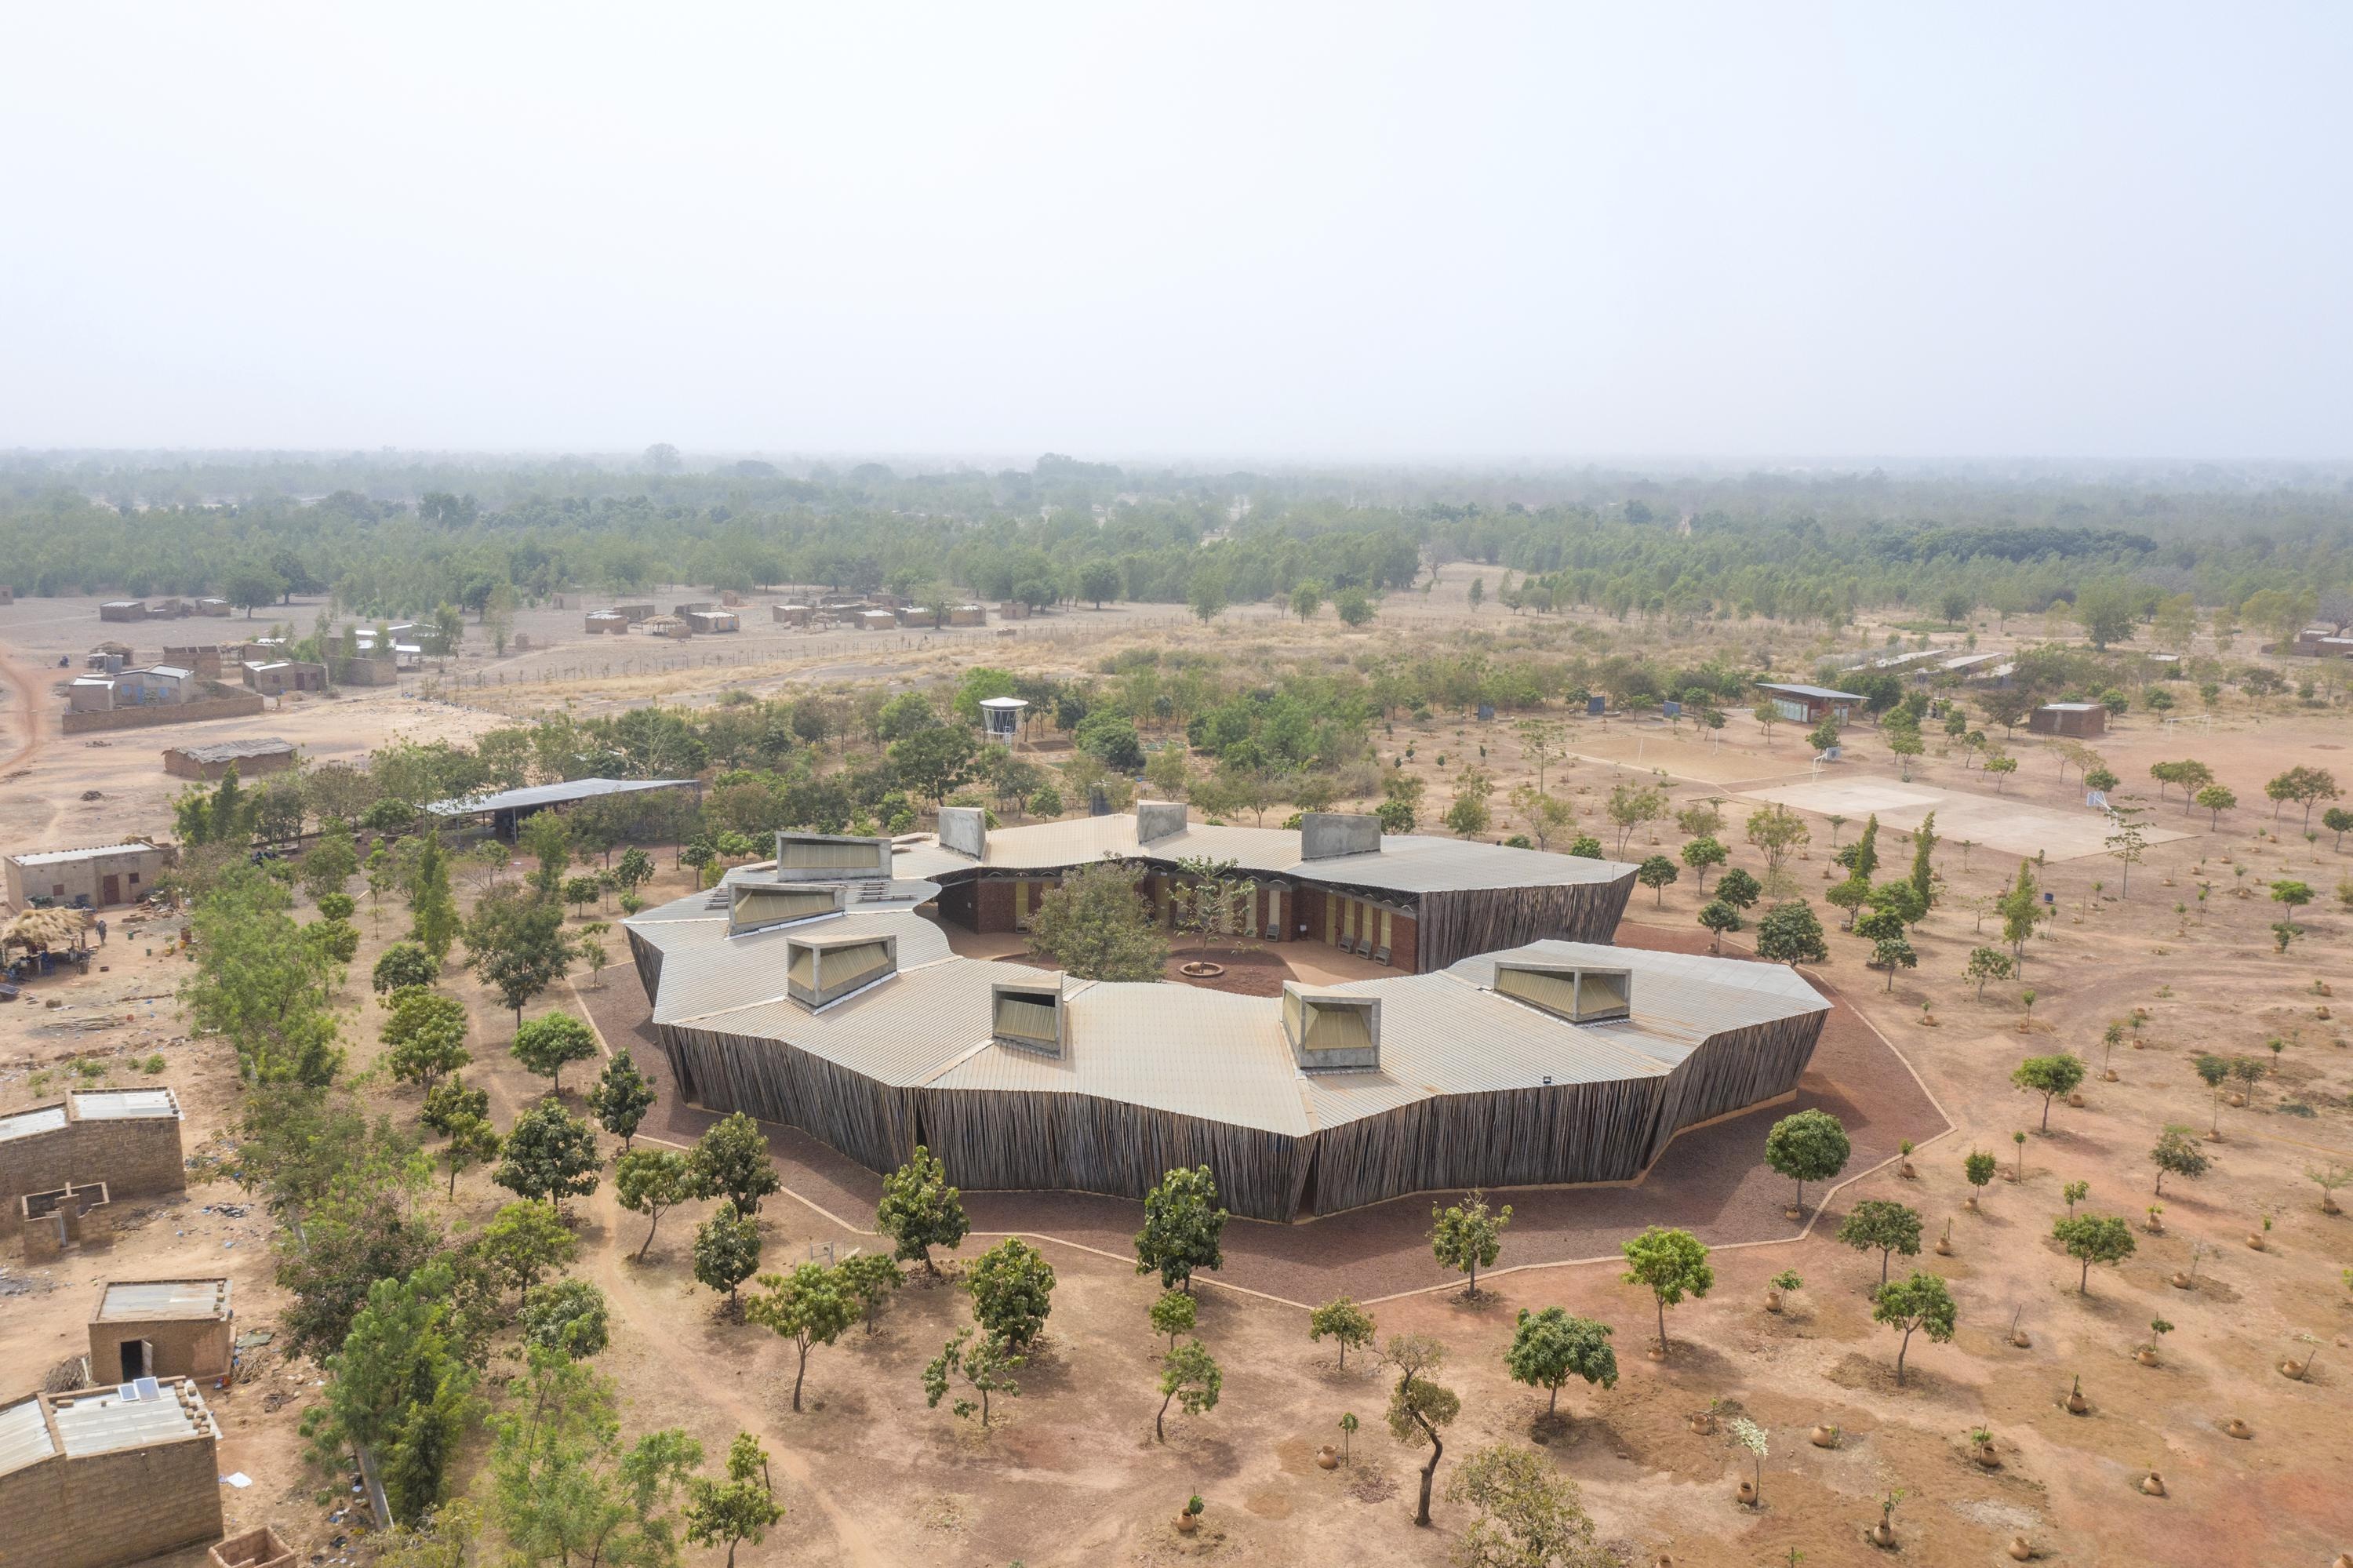 Burkina Faso travels, Pritzker Prize awarded, Burkina Faso, German architect, 3000x2000 HD Desktop